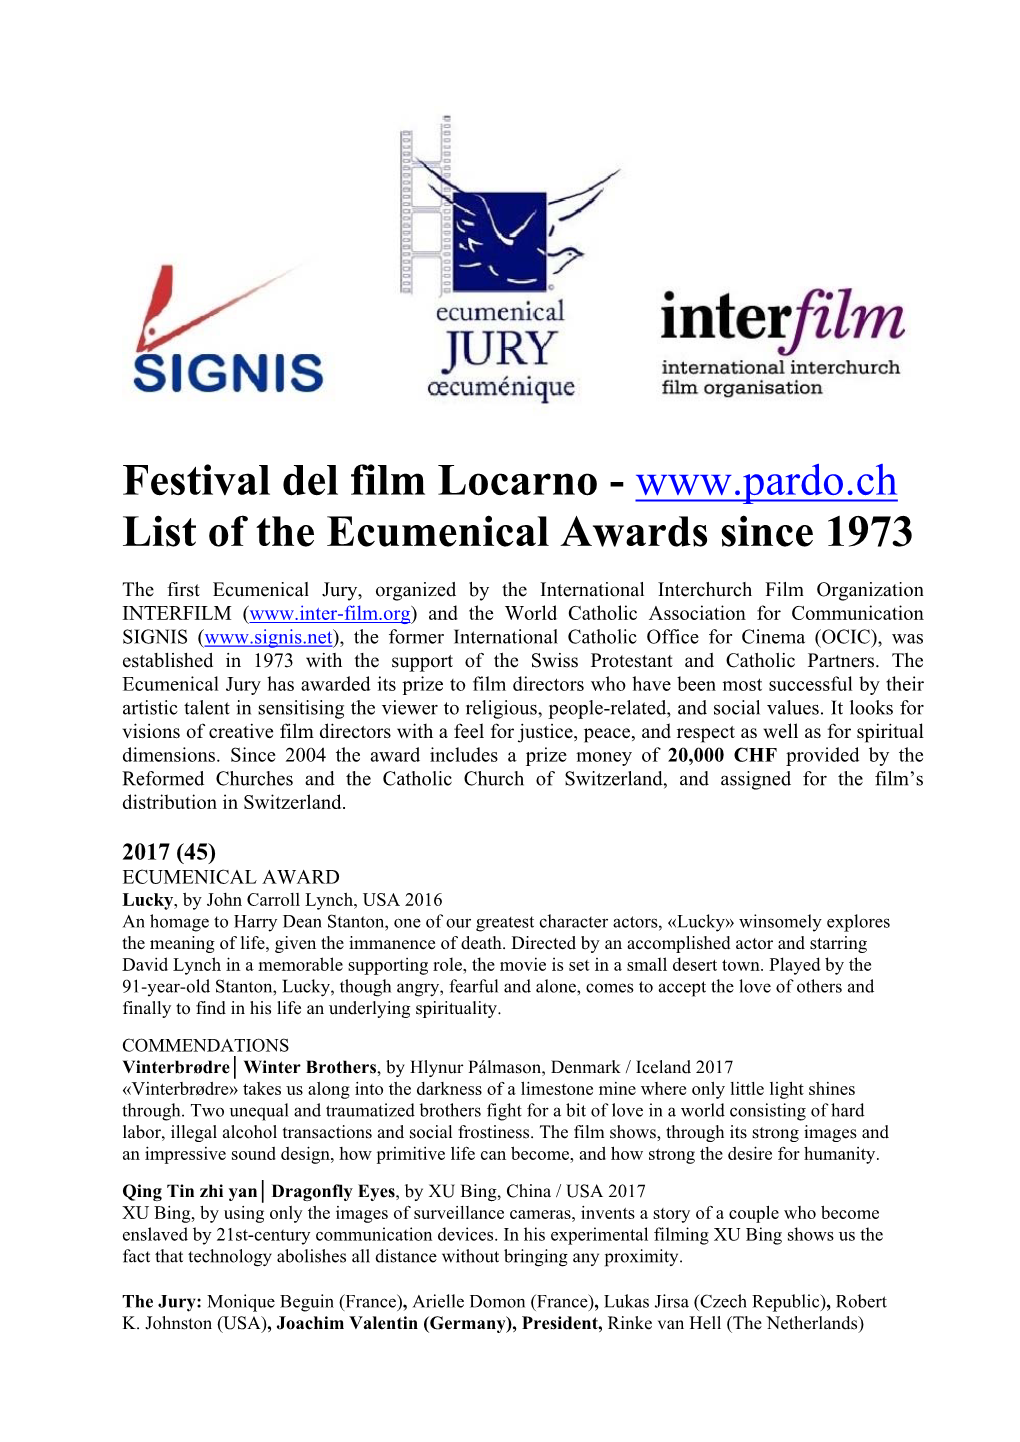 Festival Del Film Locarno - List of the Ecumenical Awards Since 1973